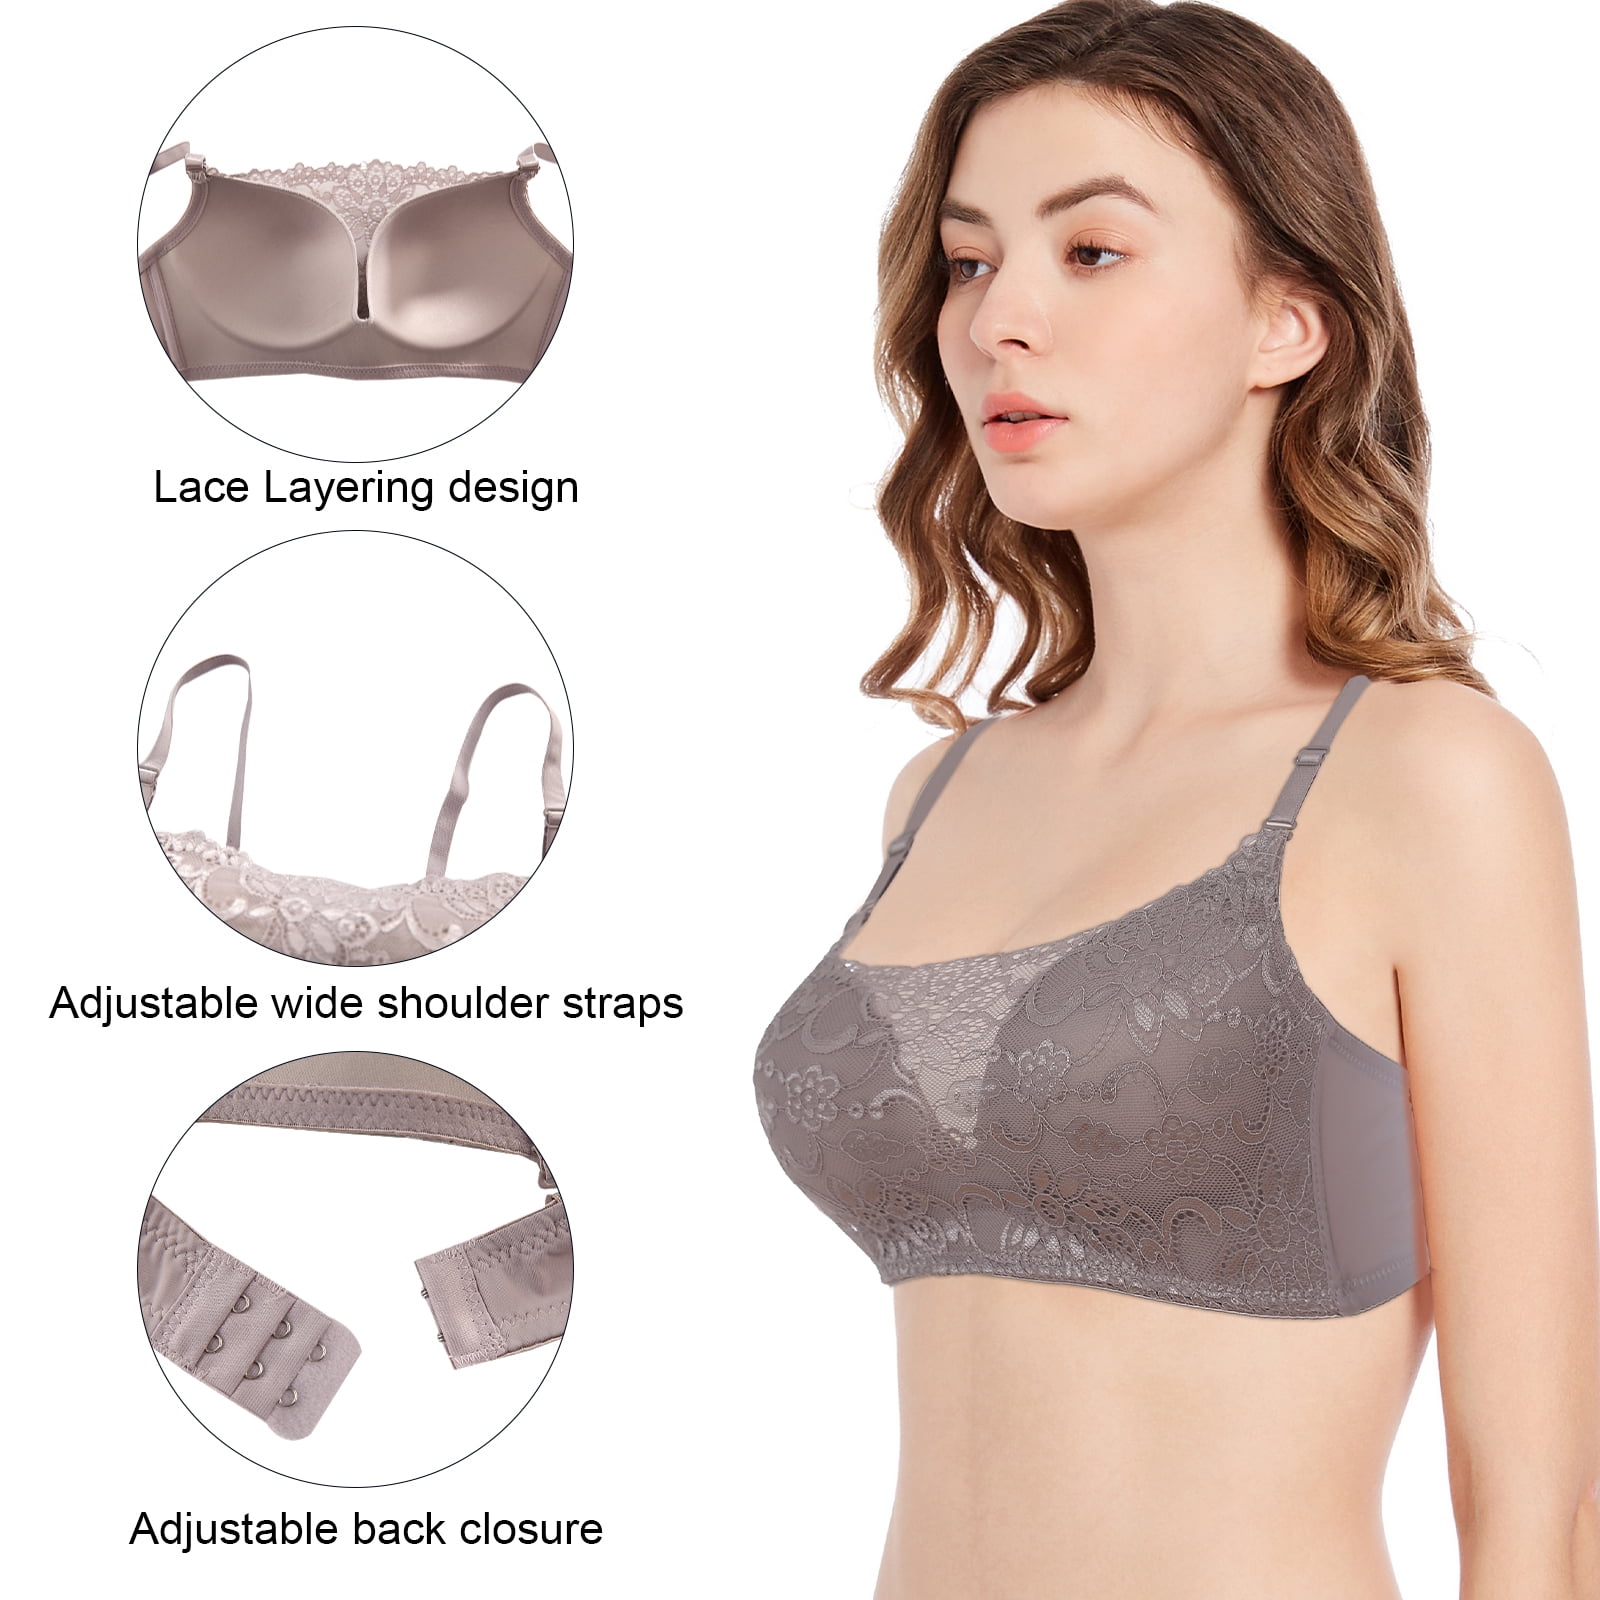 Amante 34c Lace Bra Womens Innerwear - Get Best Price from